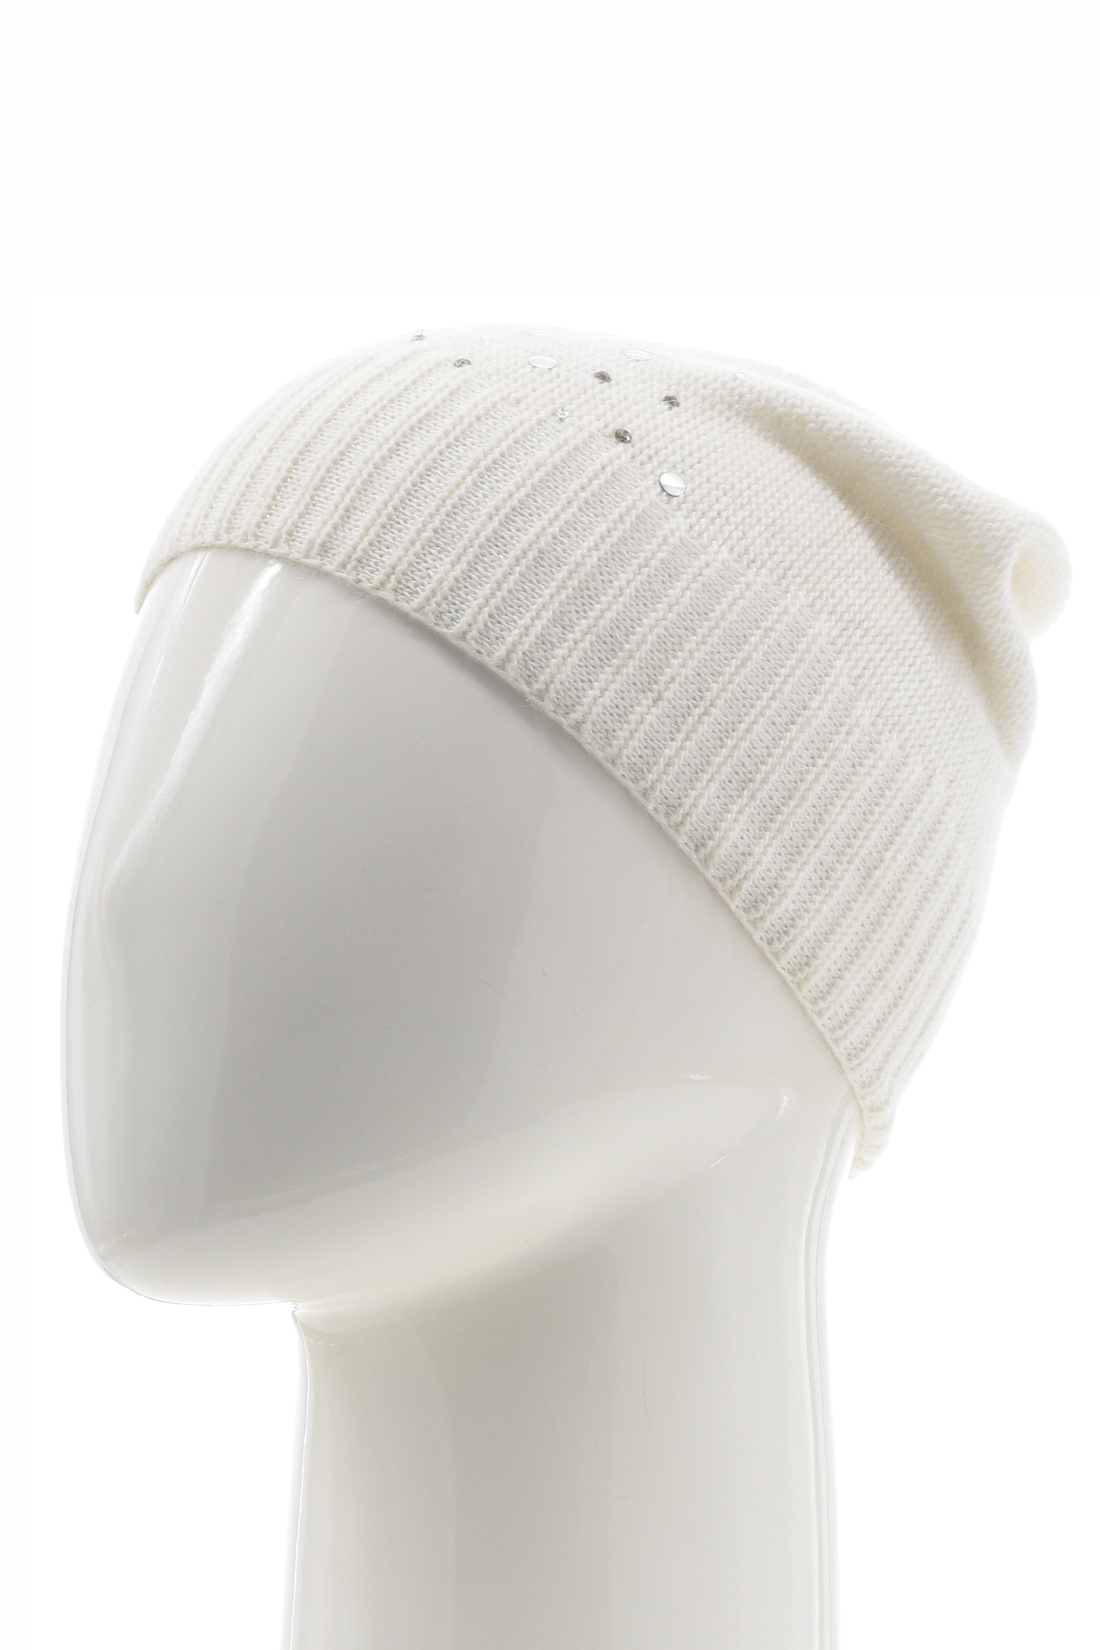 Полушерстяная шапка со стразами (арт. baon B348576), размер Б/р 56, цвет белый Полушерстяная шапка со стразами (арт. baon B348576) - фото 1